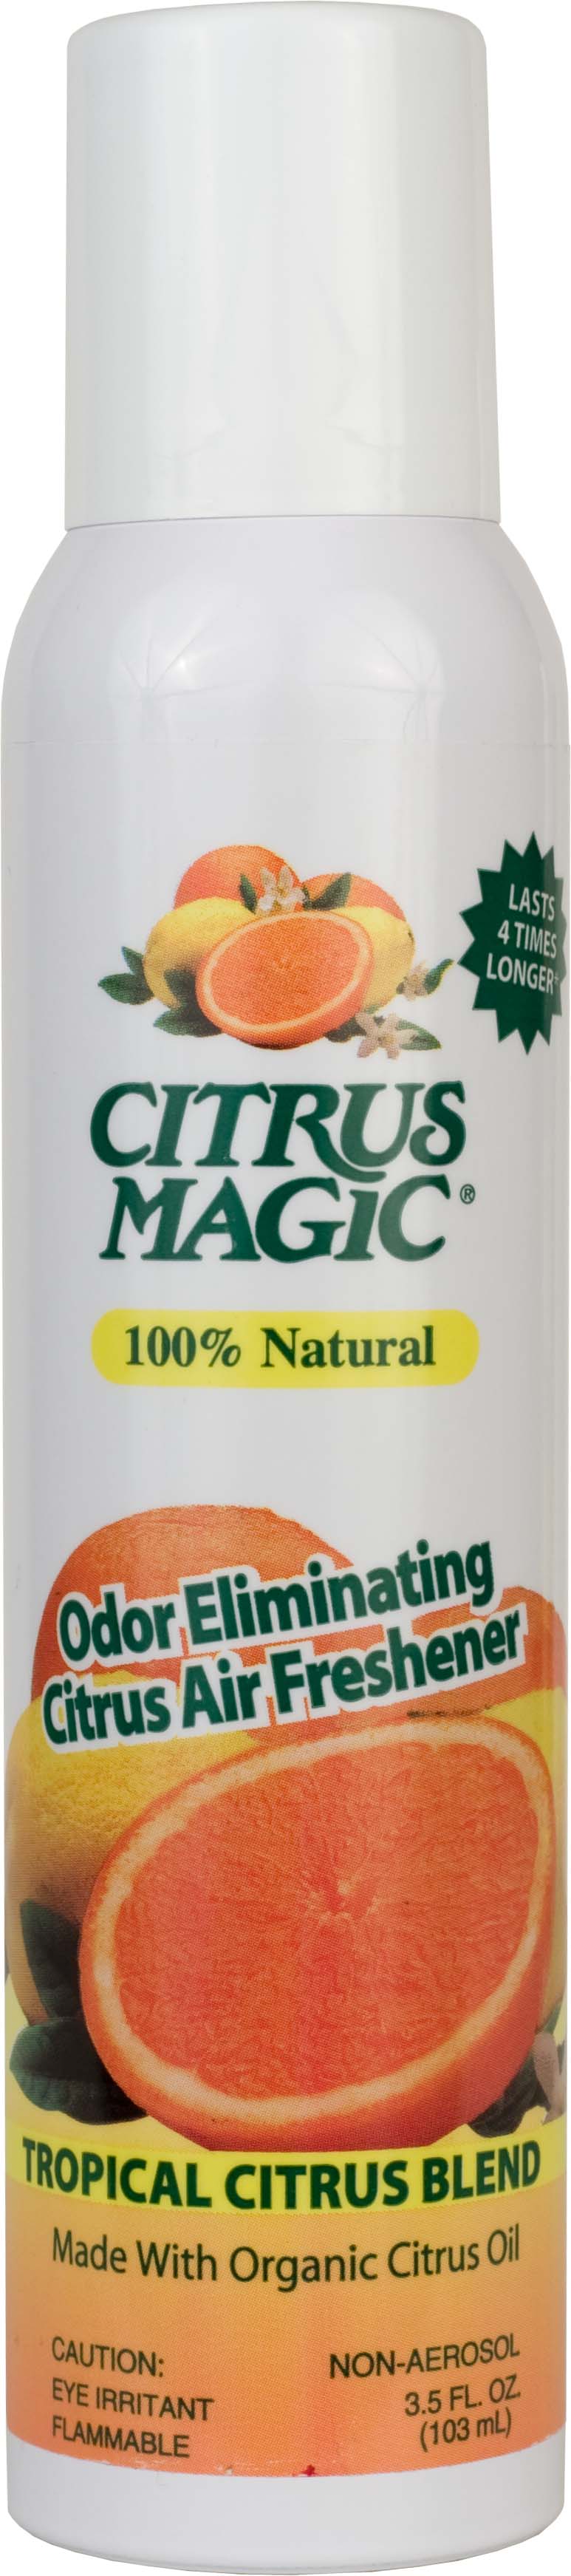 Citrus Magic 3.5fl oz